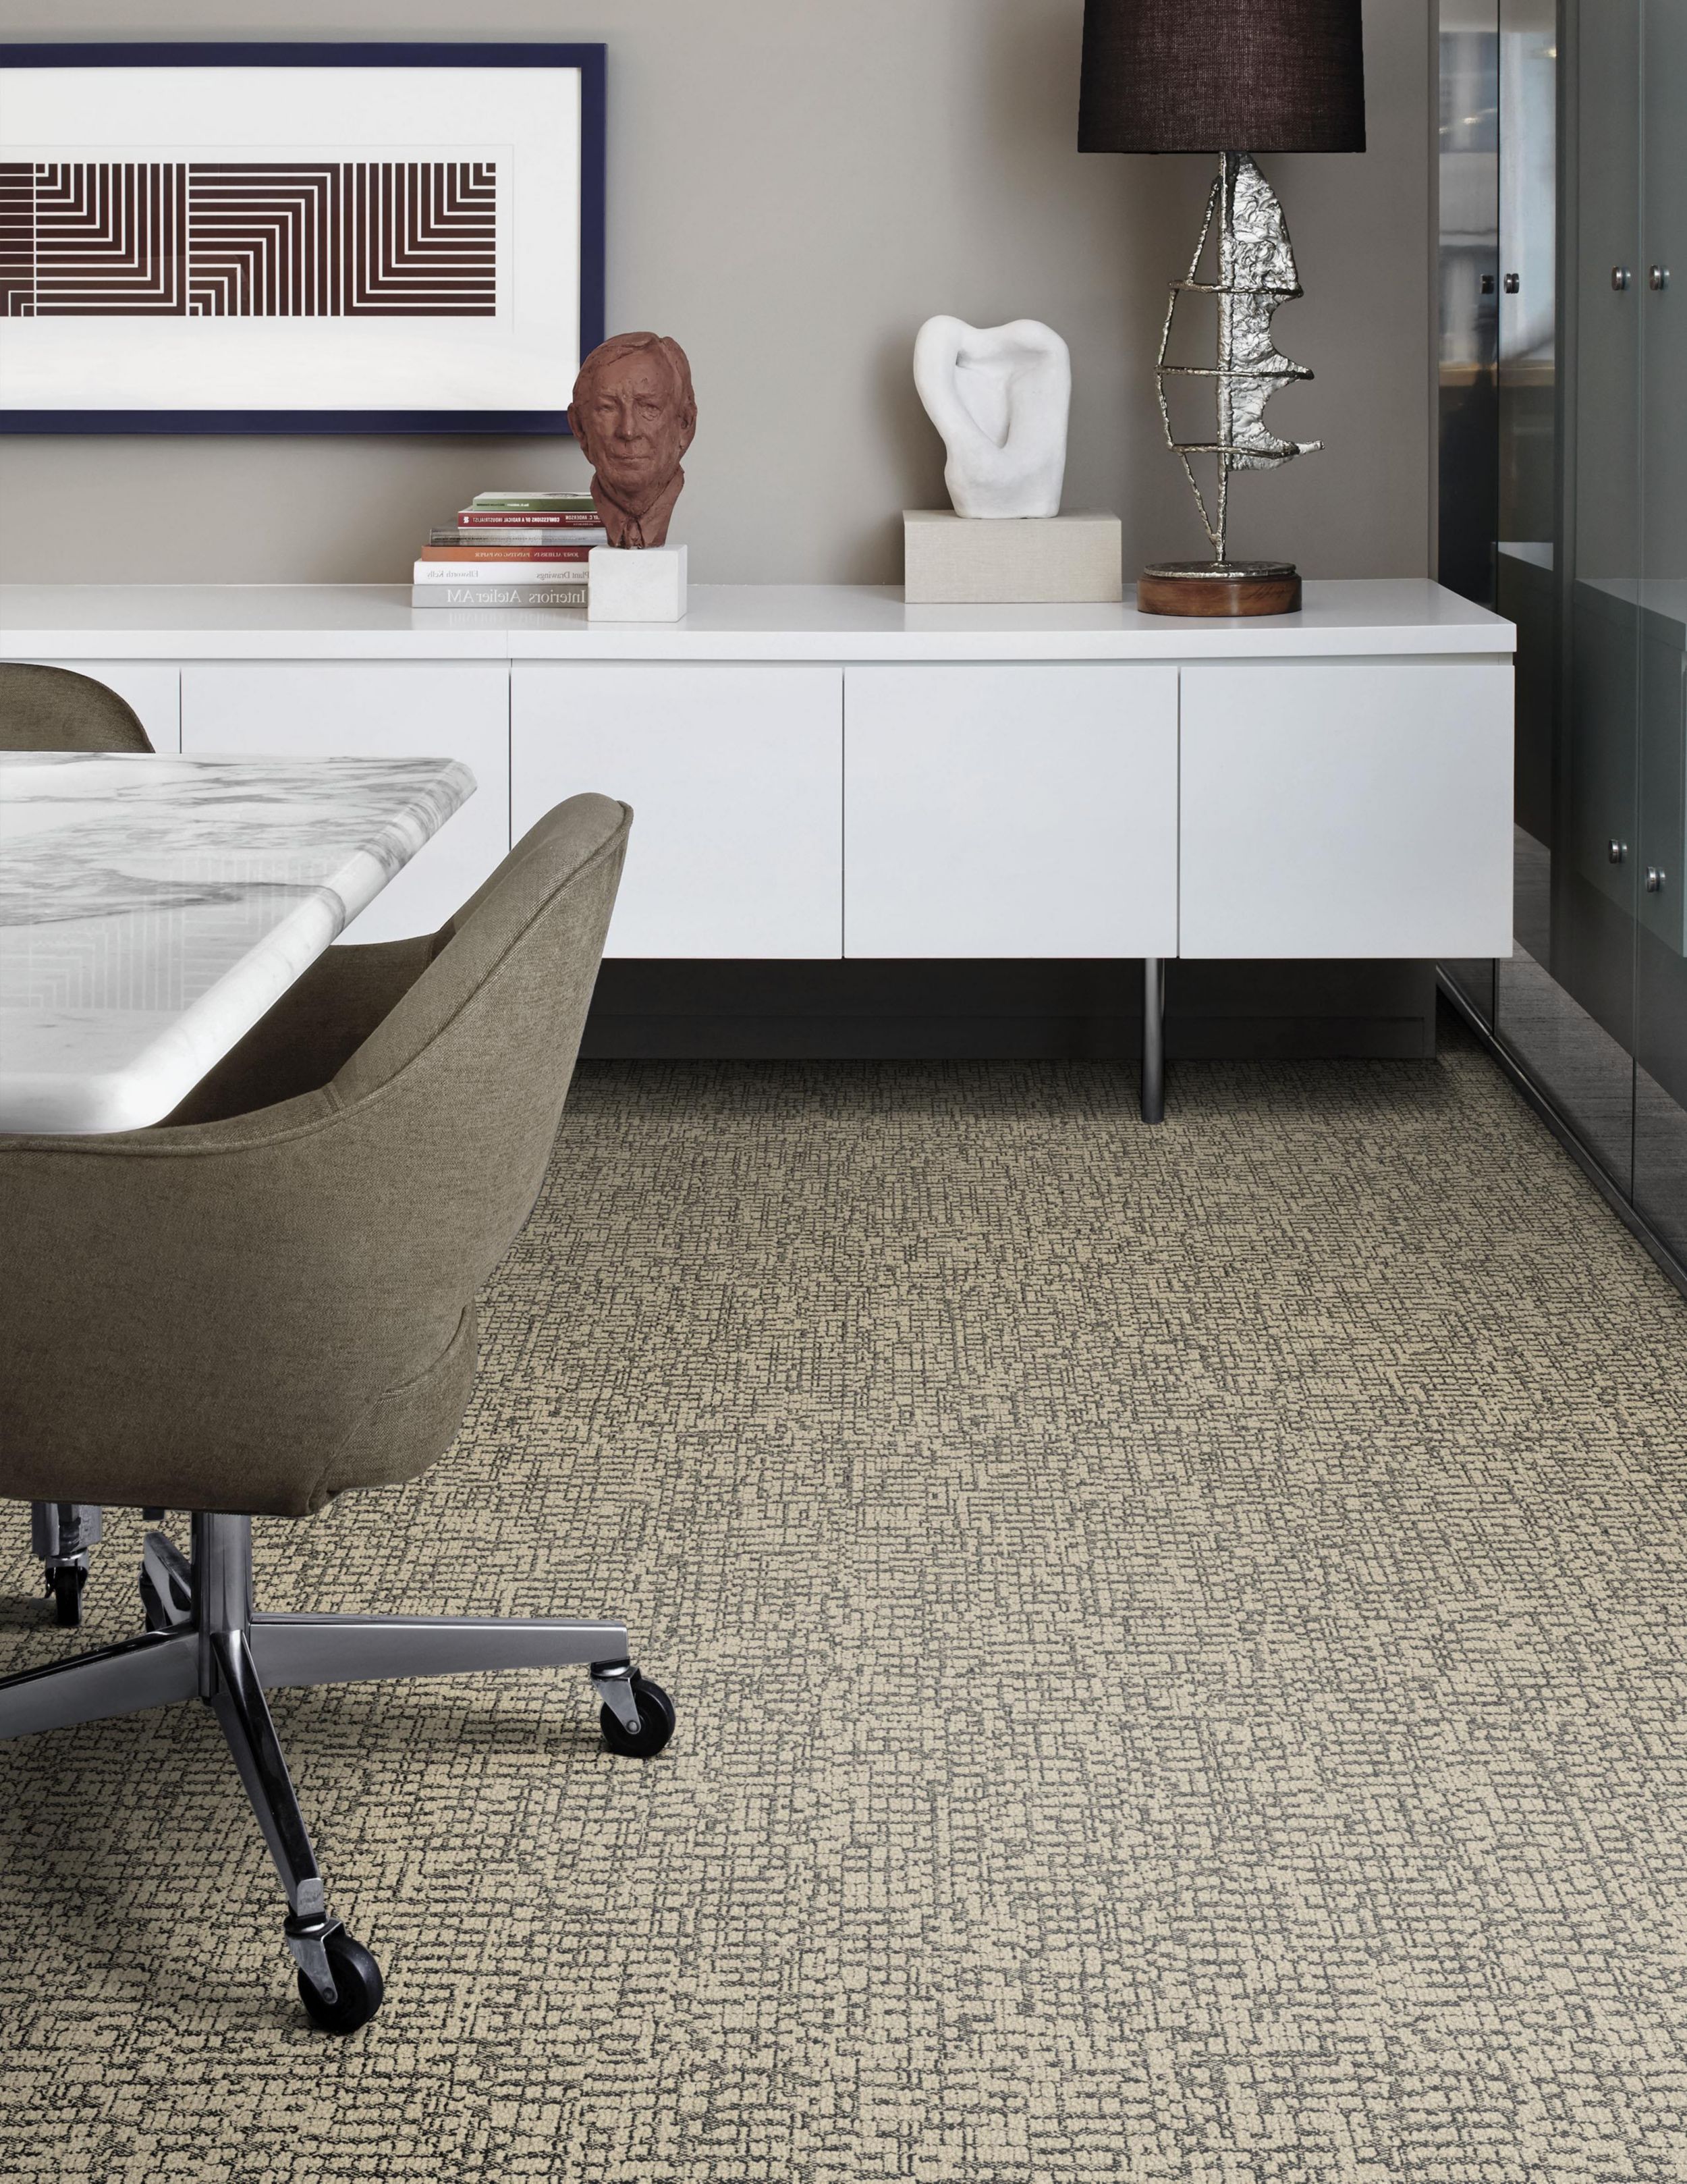 Interface DL904 carpet tile in private office imagen número 1